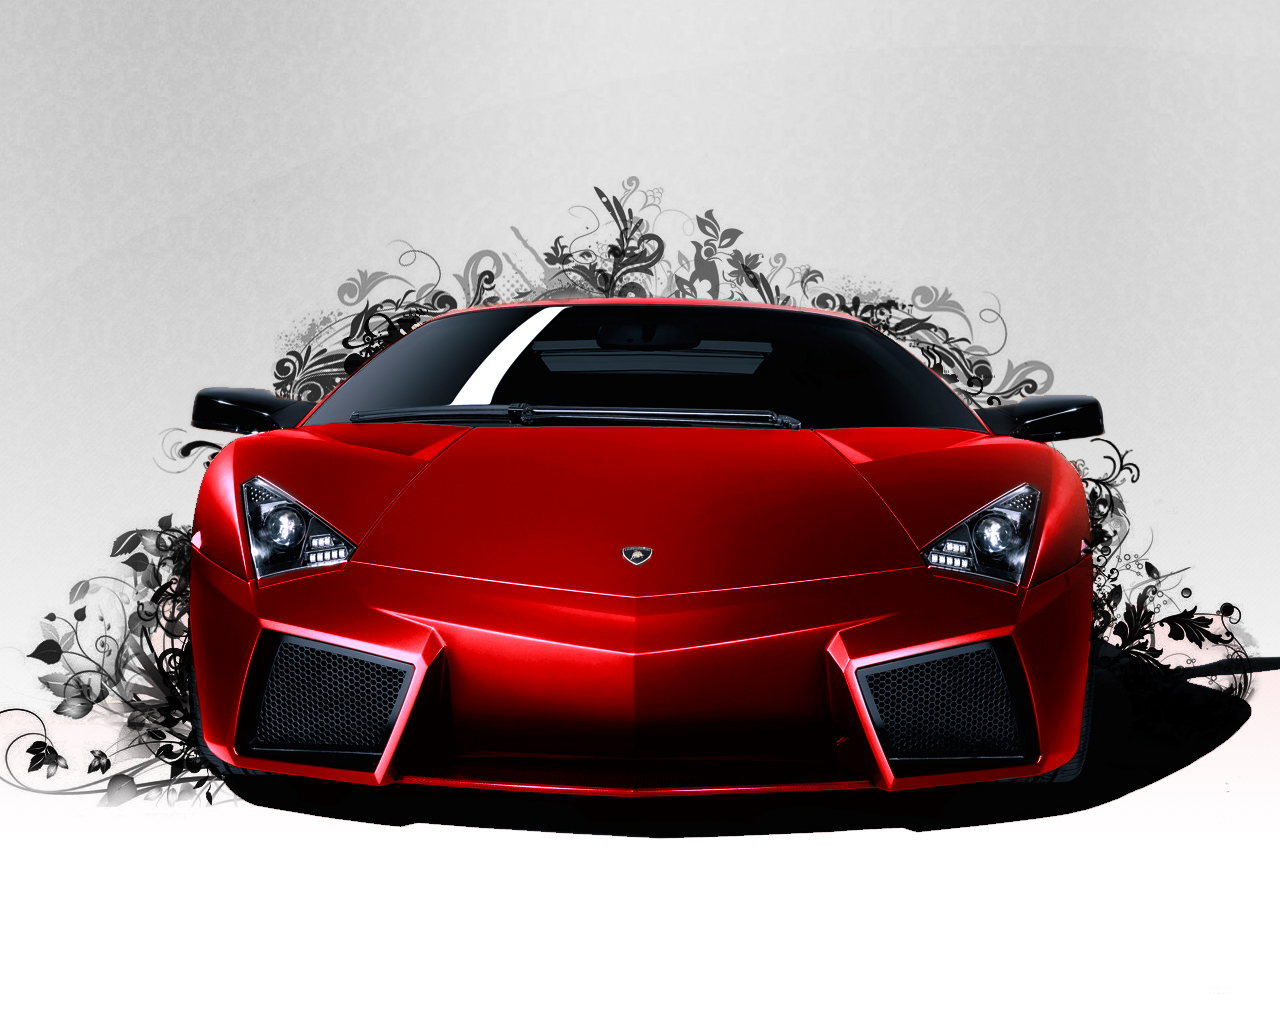 Fondos de Pantalla Lamborghini Coches descargar imagenes